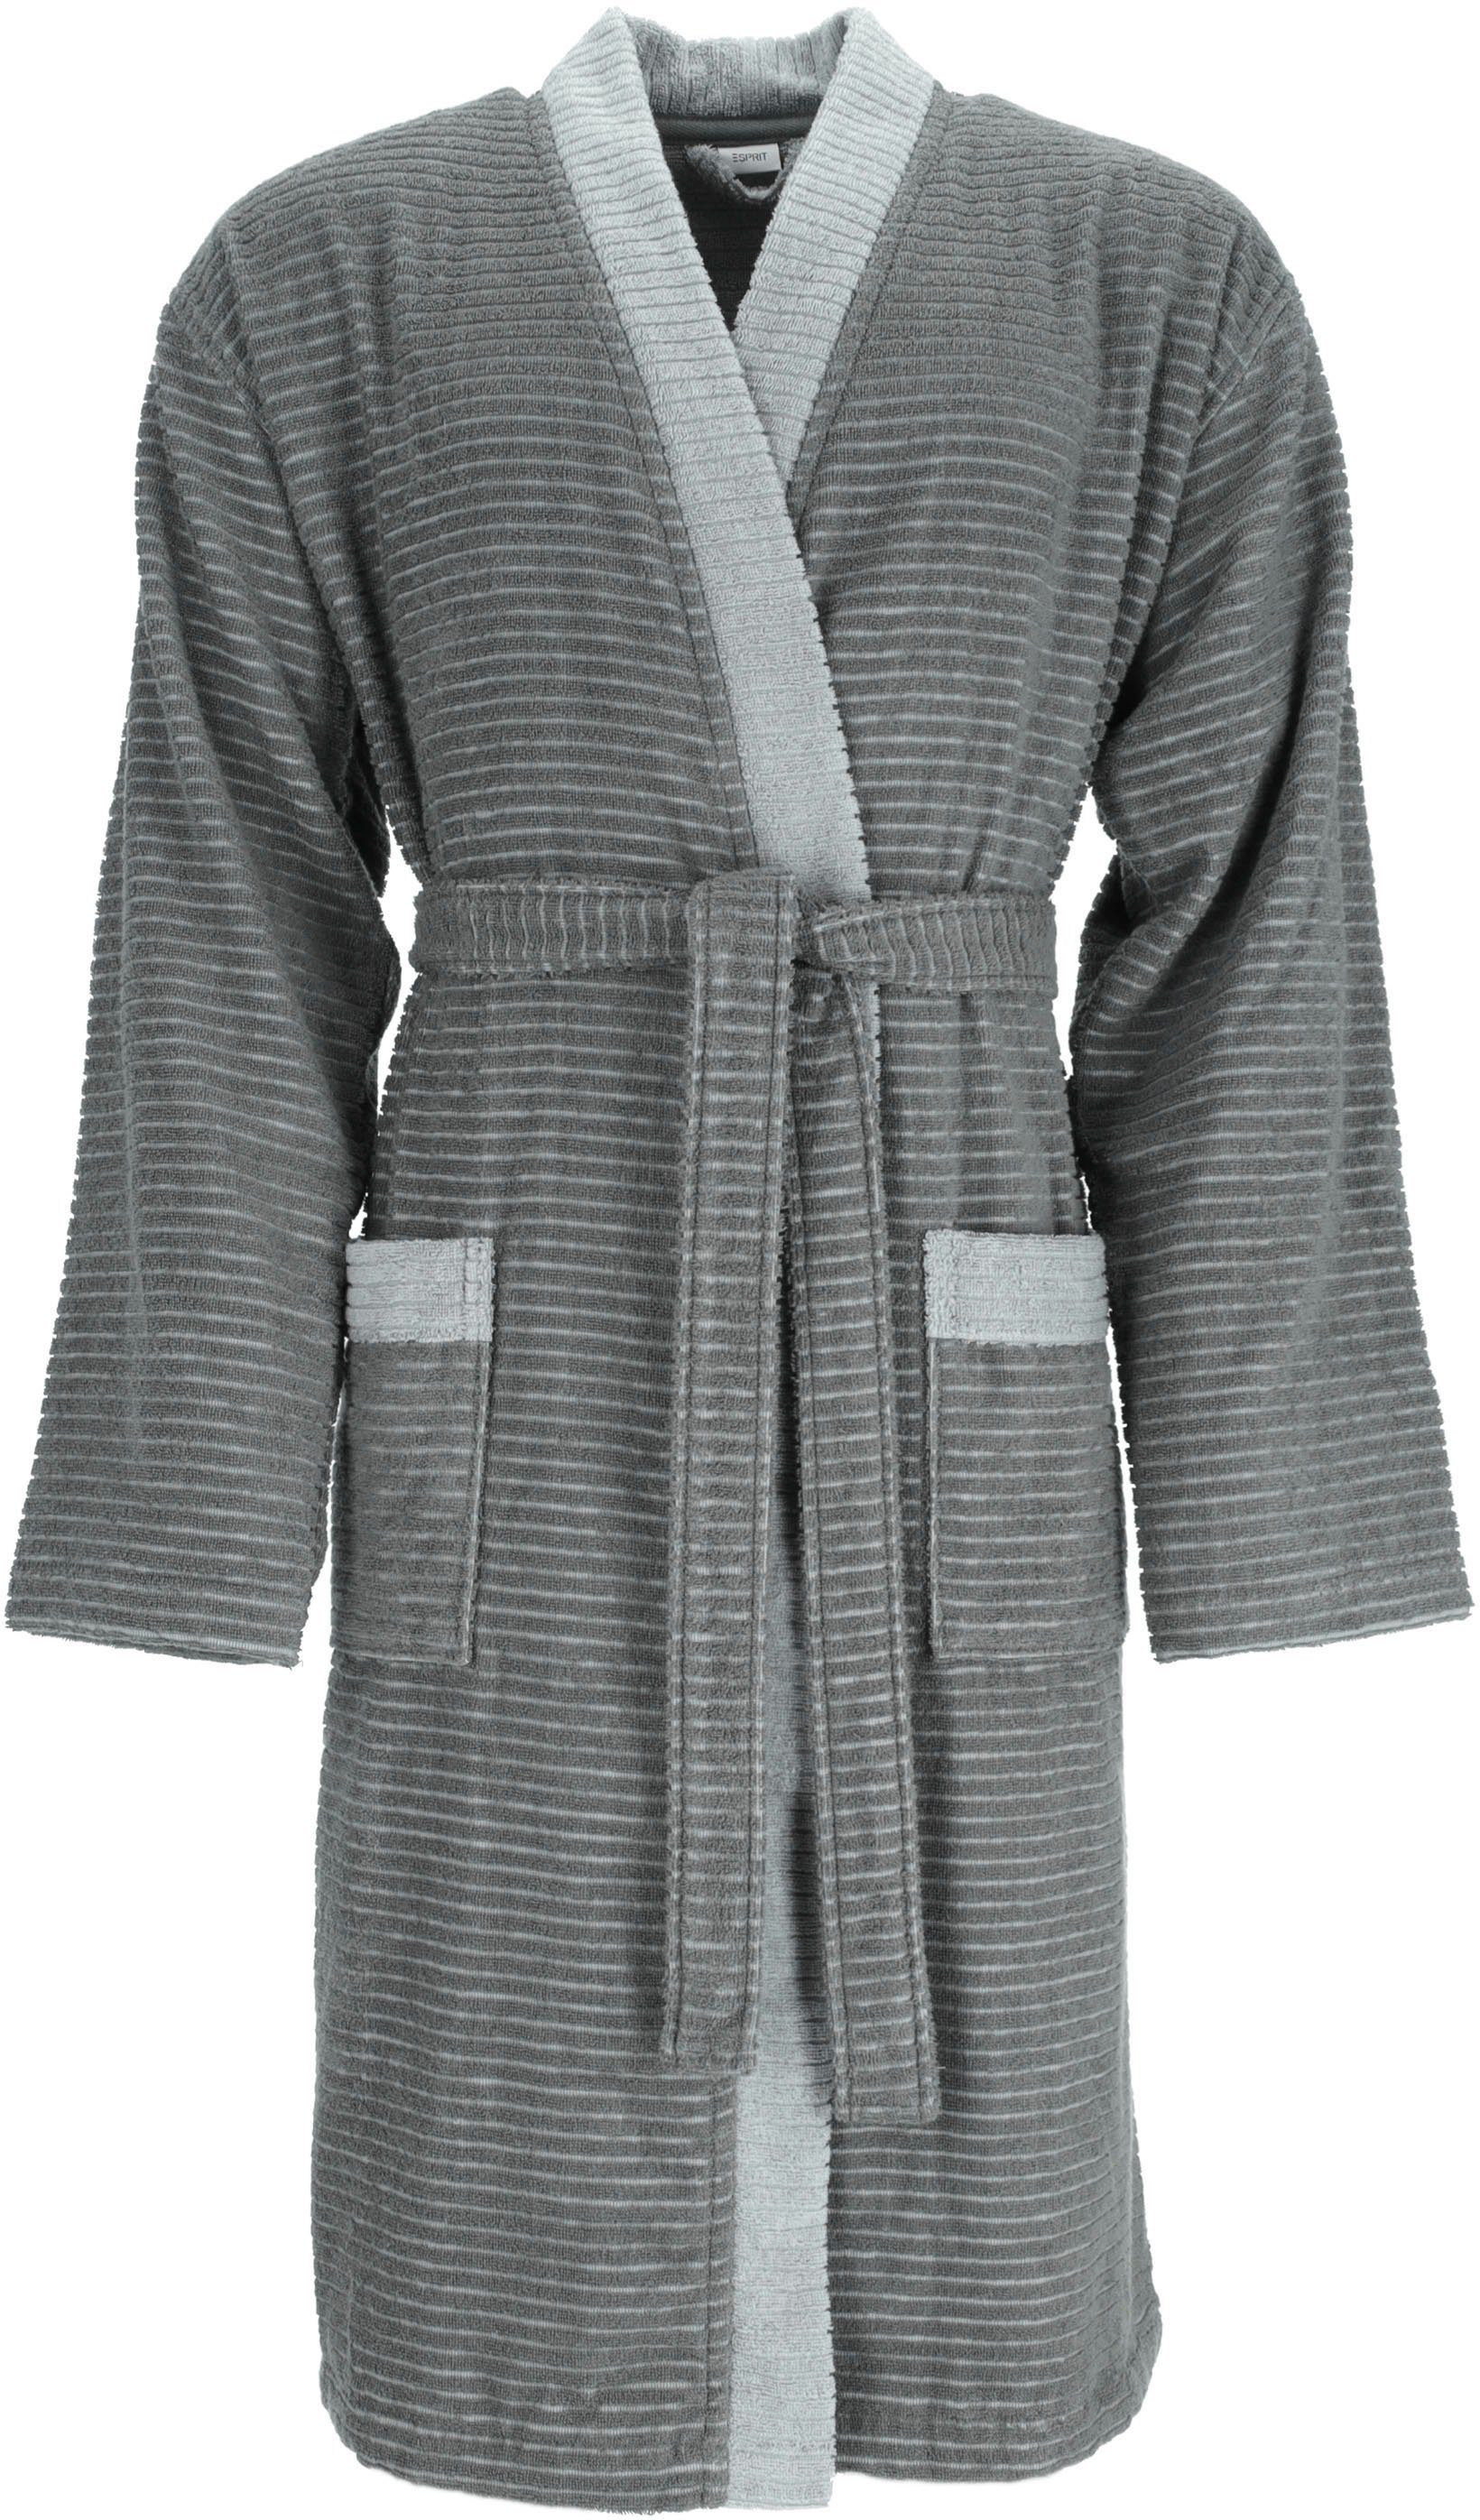 Esprit Herrenbademantel anthracite Double Kimonomantel Doubleface Kimono-Kragen, Langform, Stripe, Webfrottier, Gürtel